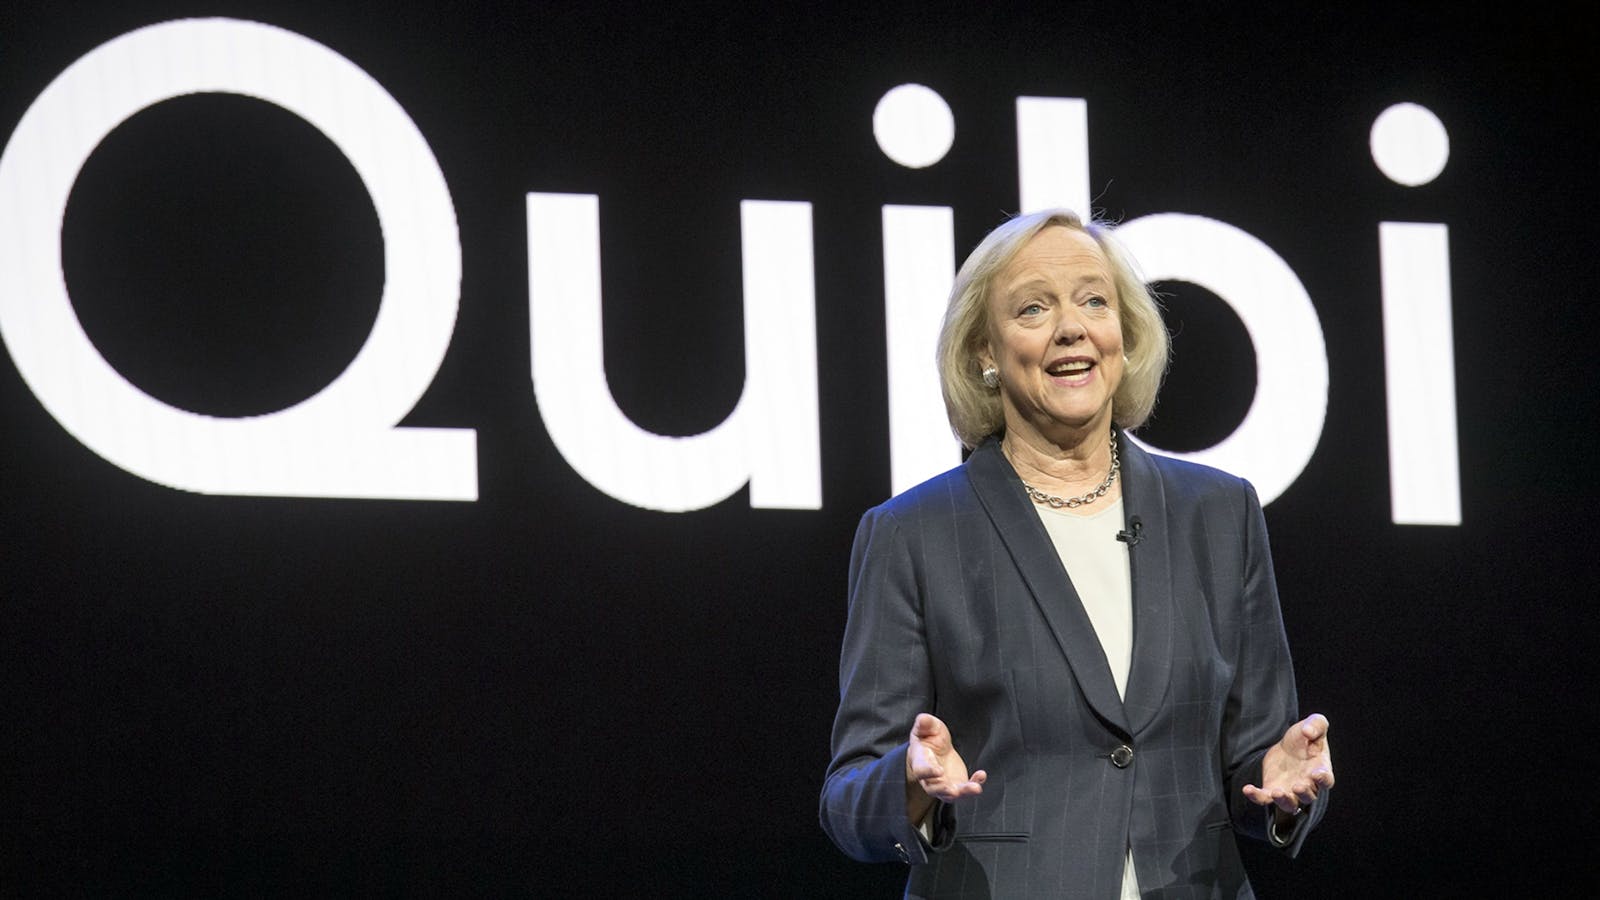 Quibi CEO Meg Whitman. Photo by Bloomberg